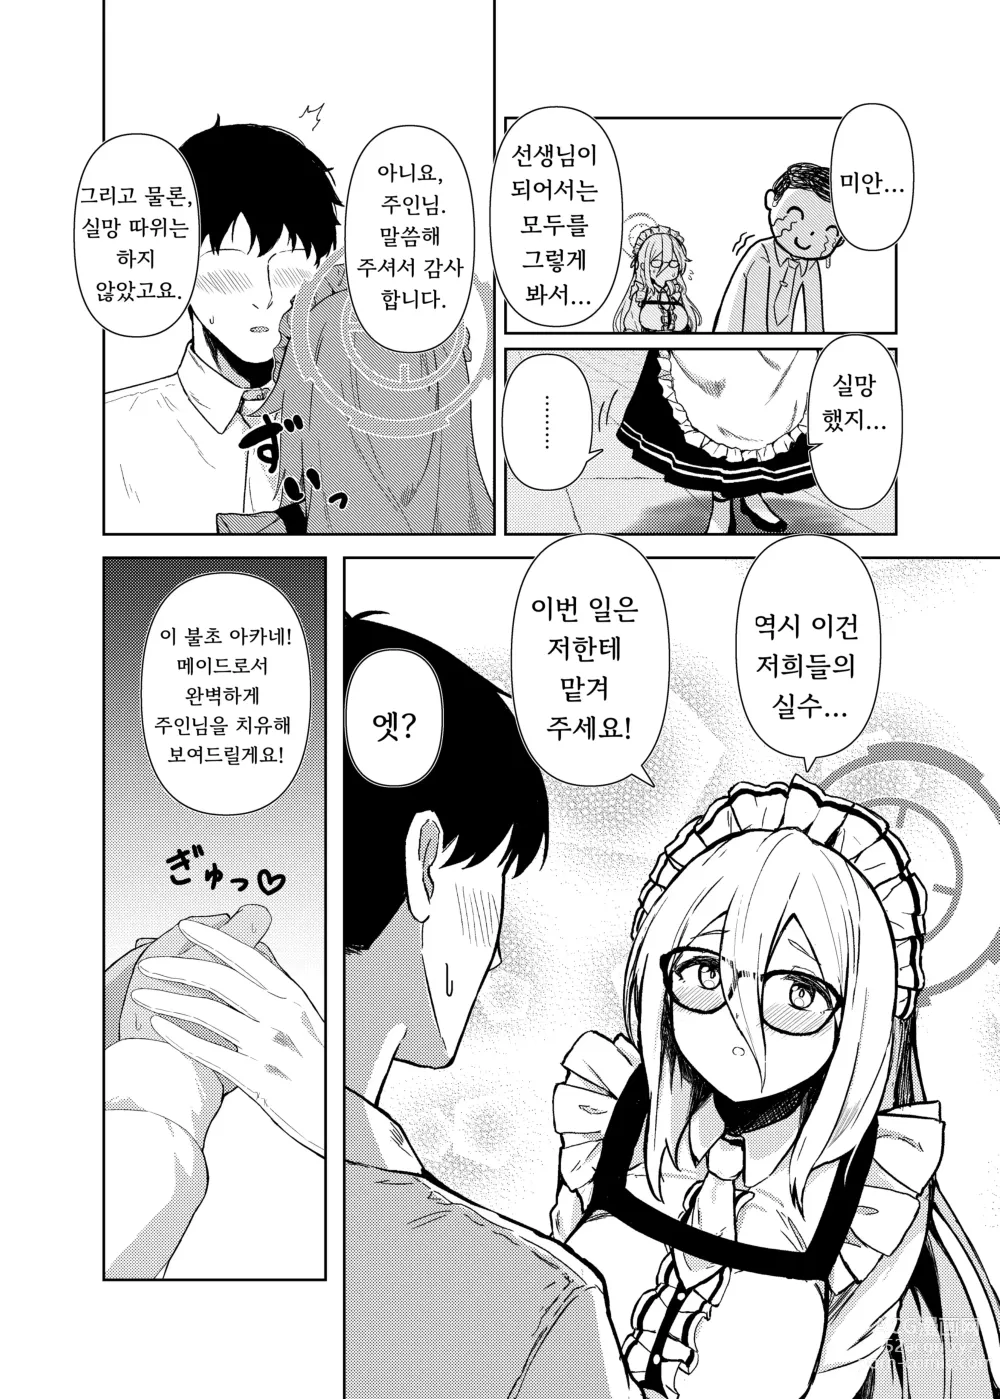 Page 6 of doujinshi 아카네한테 치유받지 않으실래요?